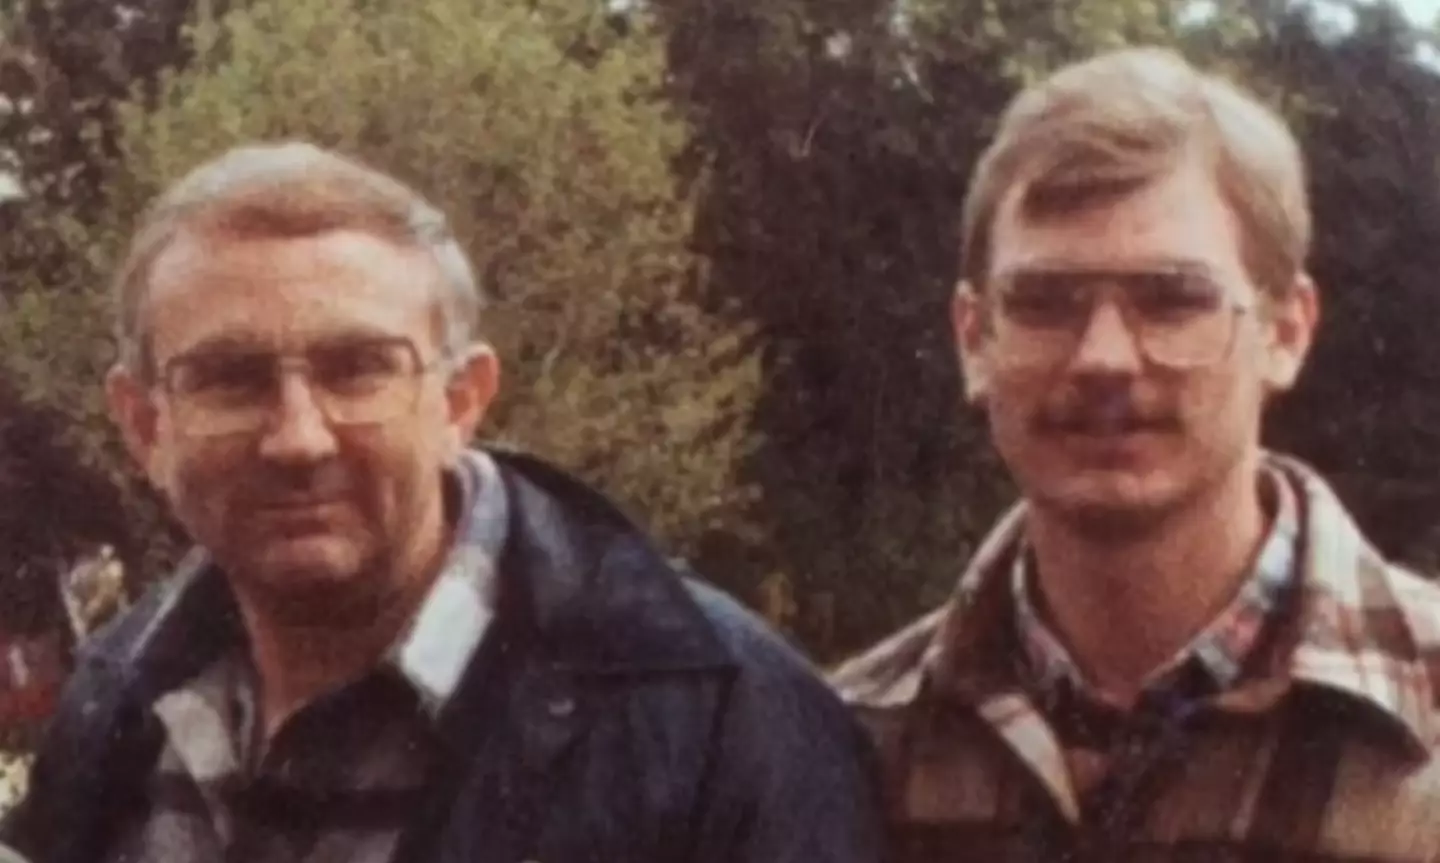 Lionel Dahmer and his serial killer son Jeffrey.